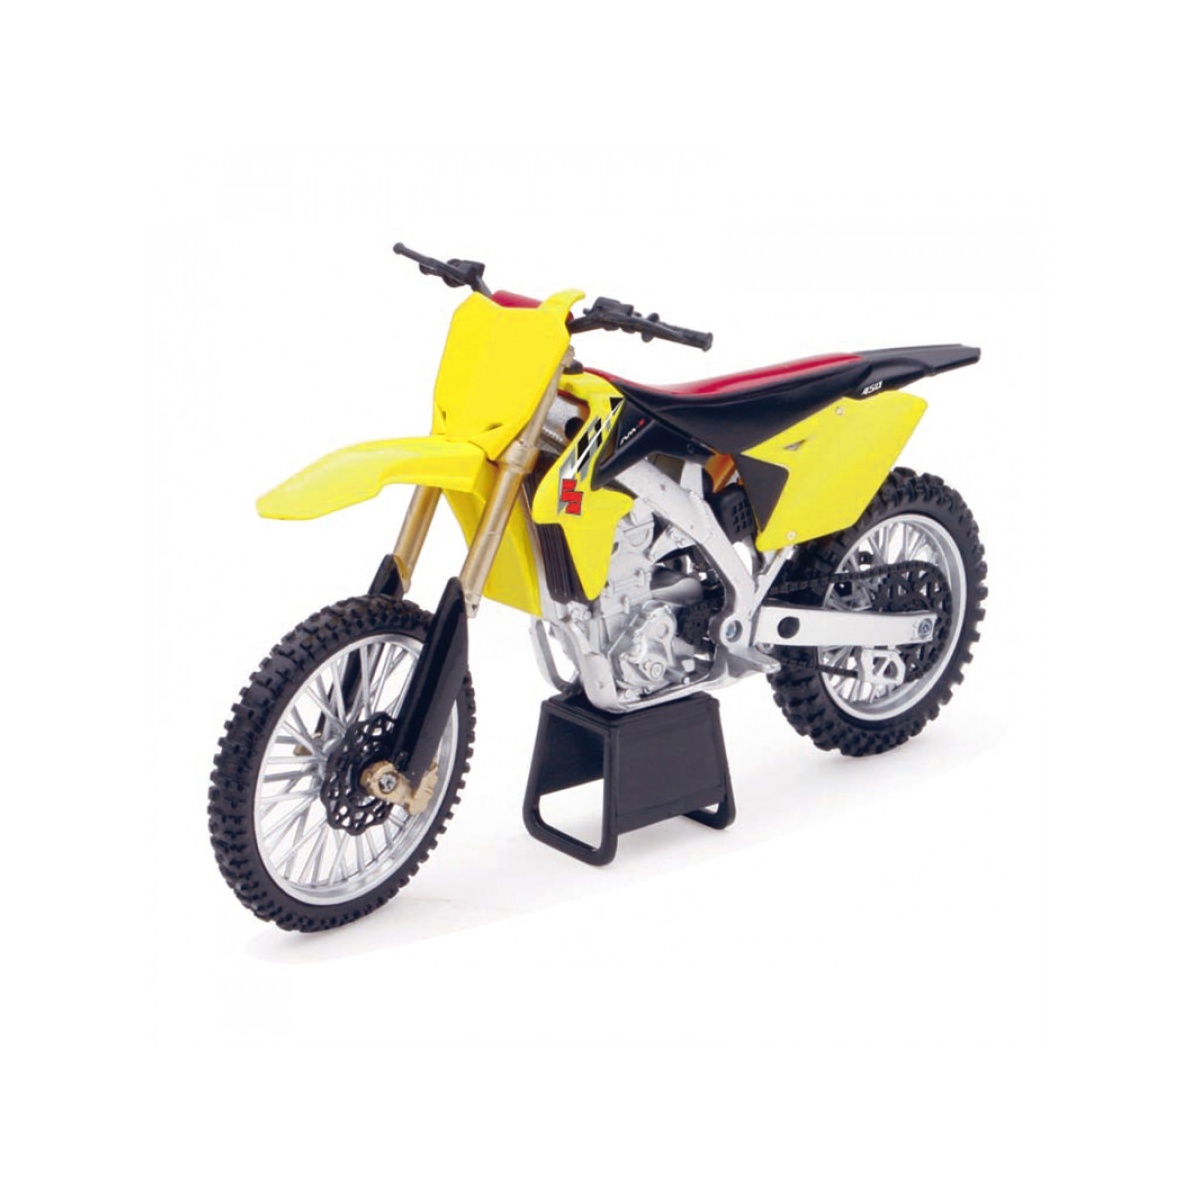 Newray 1:12 Suzuki RM Z450 Motorcycle Motocross Bike Model Toy New no Box 